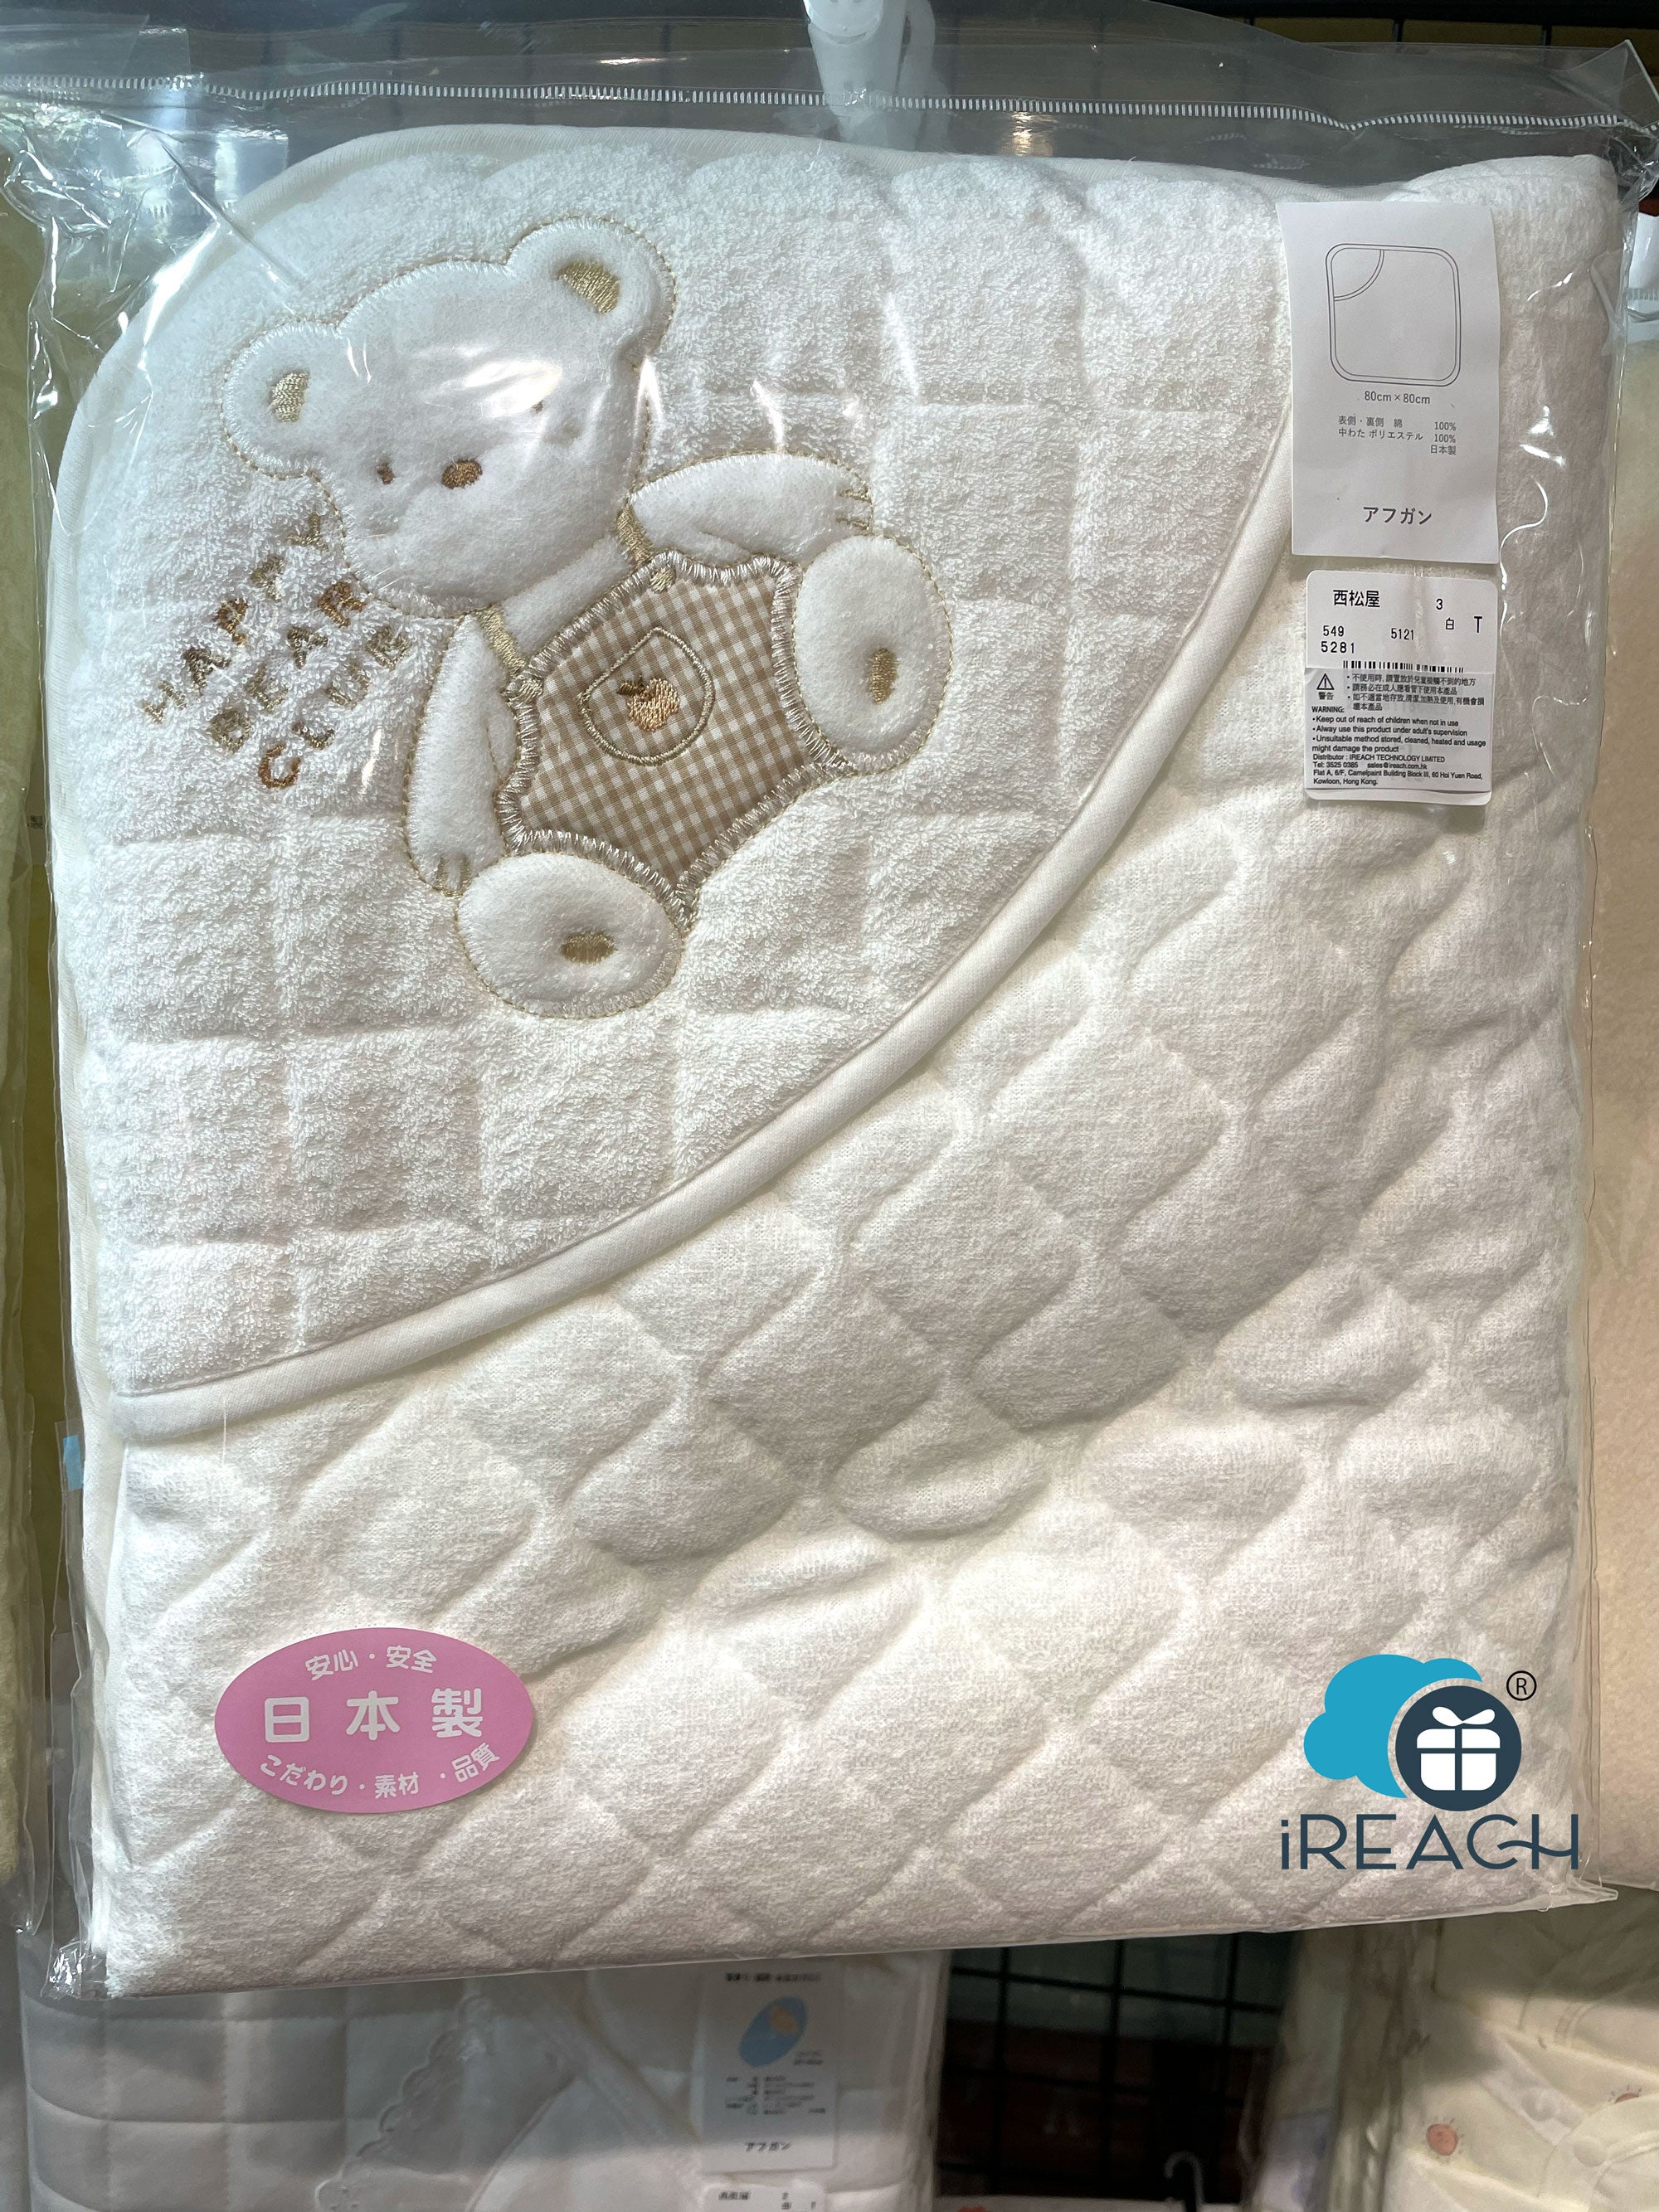 SmartAngel Baby Quilt Blanket Cotton Swaddling Four seasons Size 80x80cm Bear Made in Japan